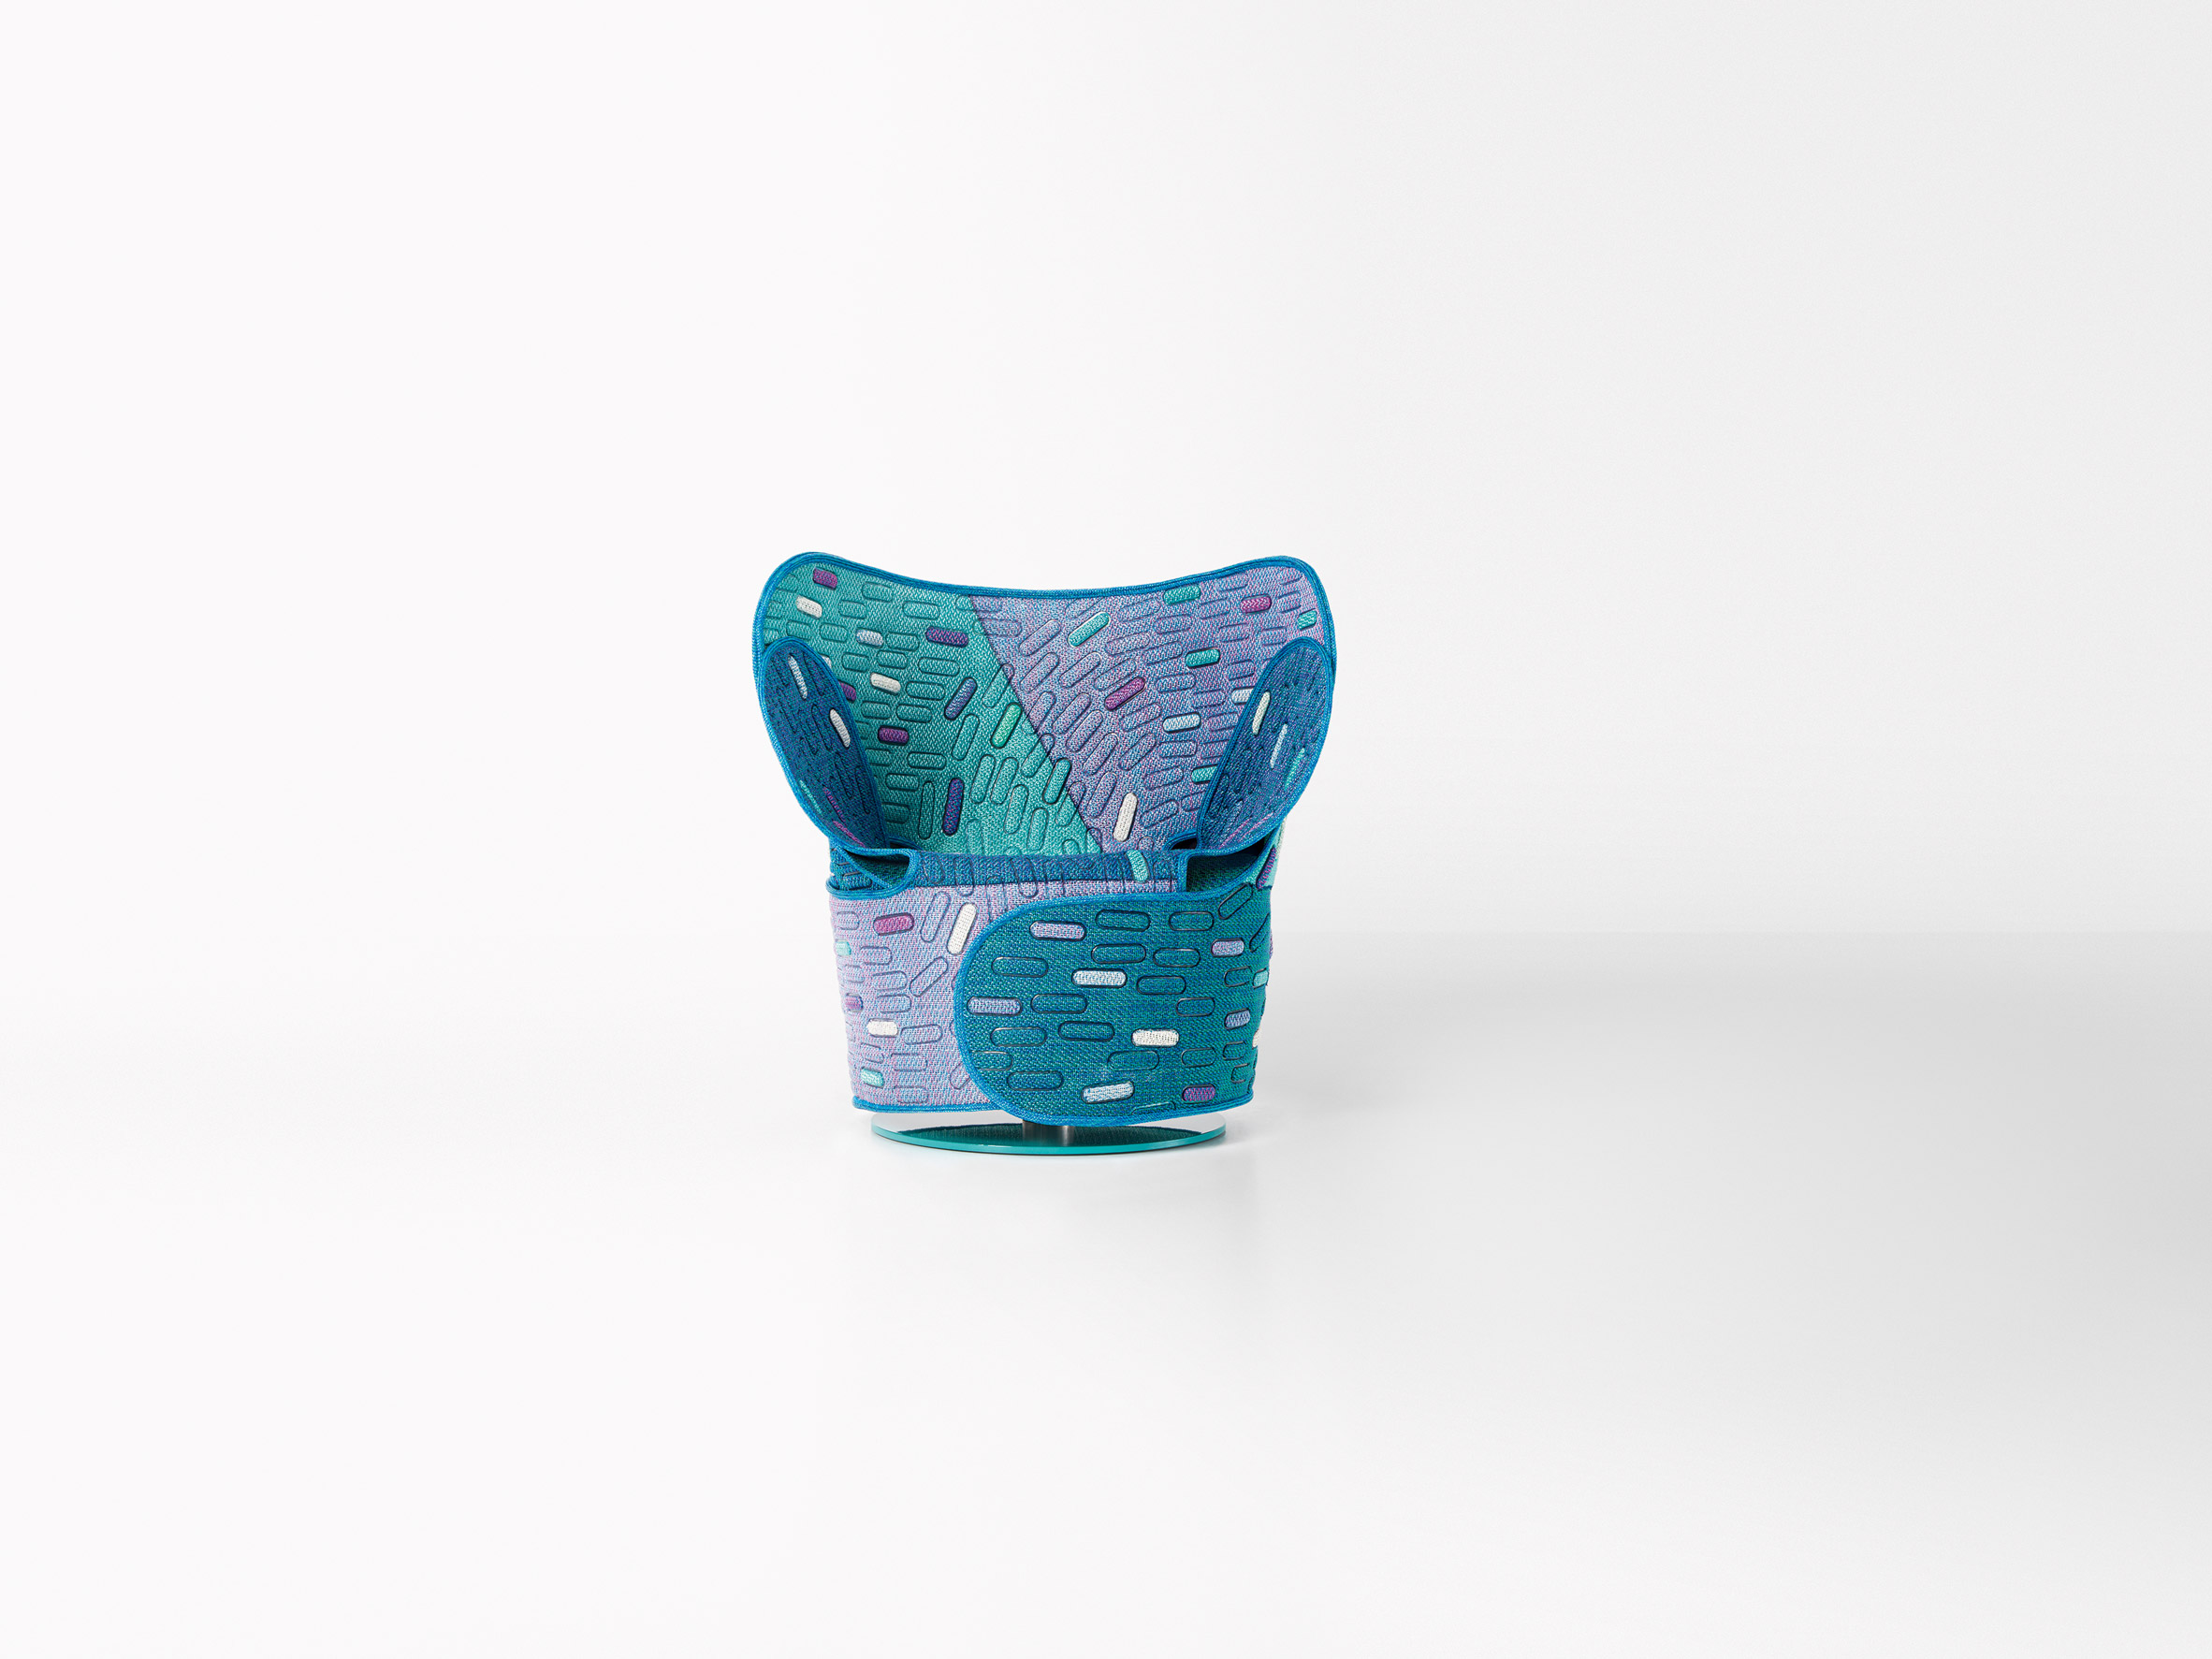 Blue chair by Nendo for Hana-arashi collection